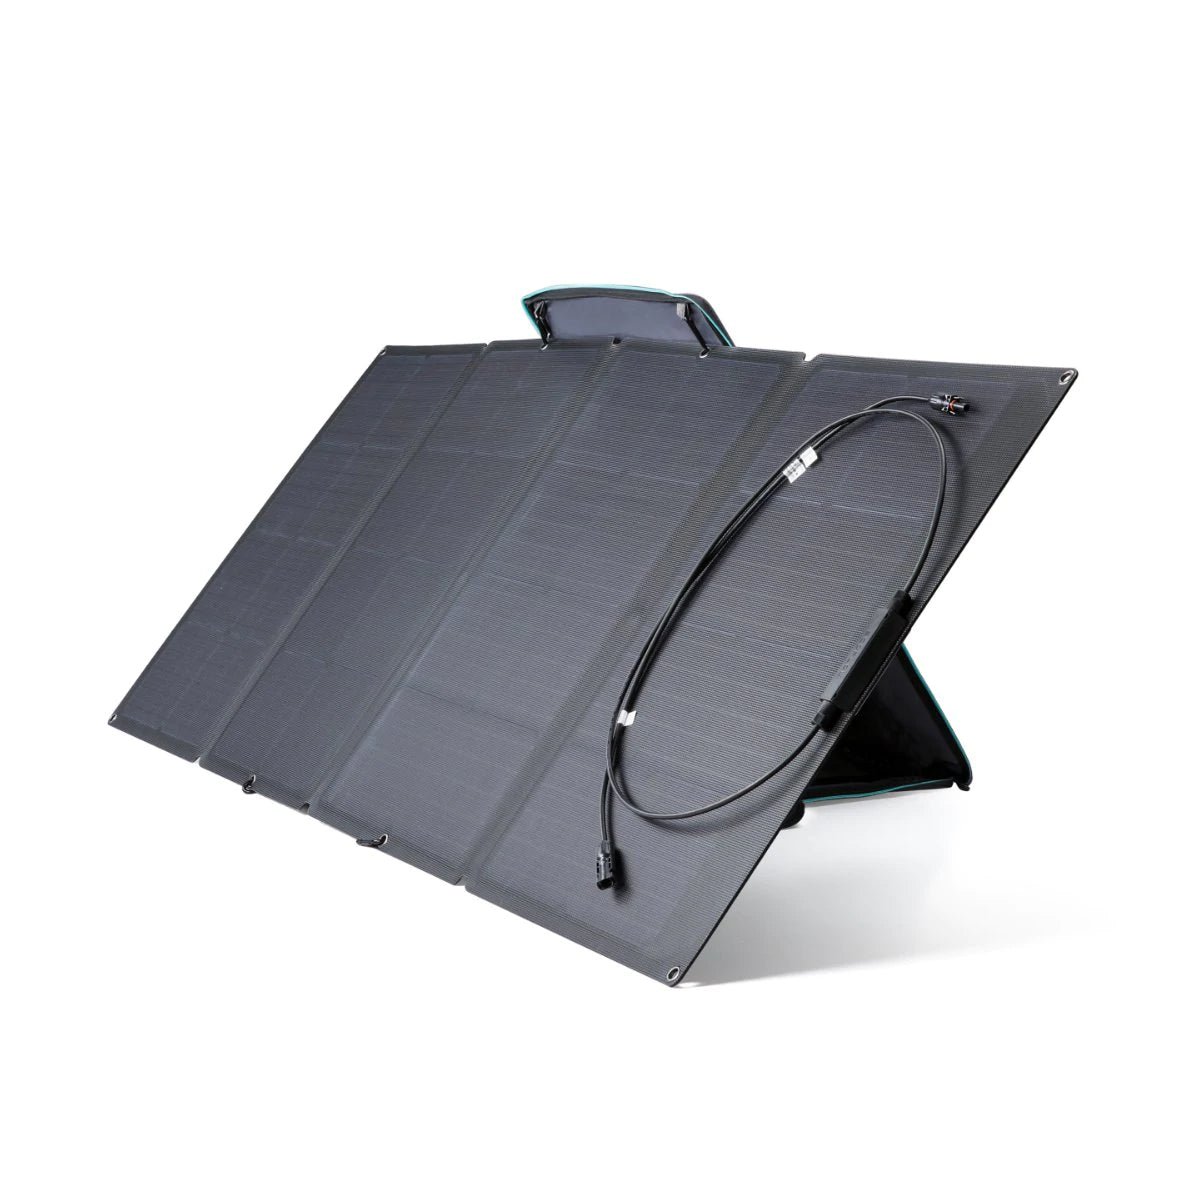 EcoFlow Delta 1300 + 2x 160W Solar Panel Solar Generator Kit DELTAAMSP162